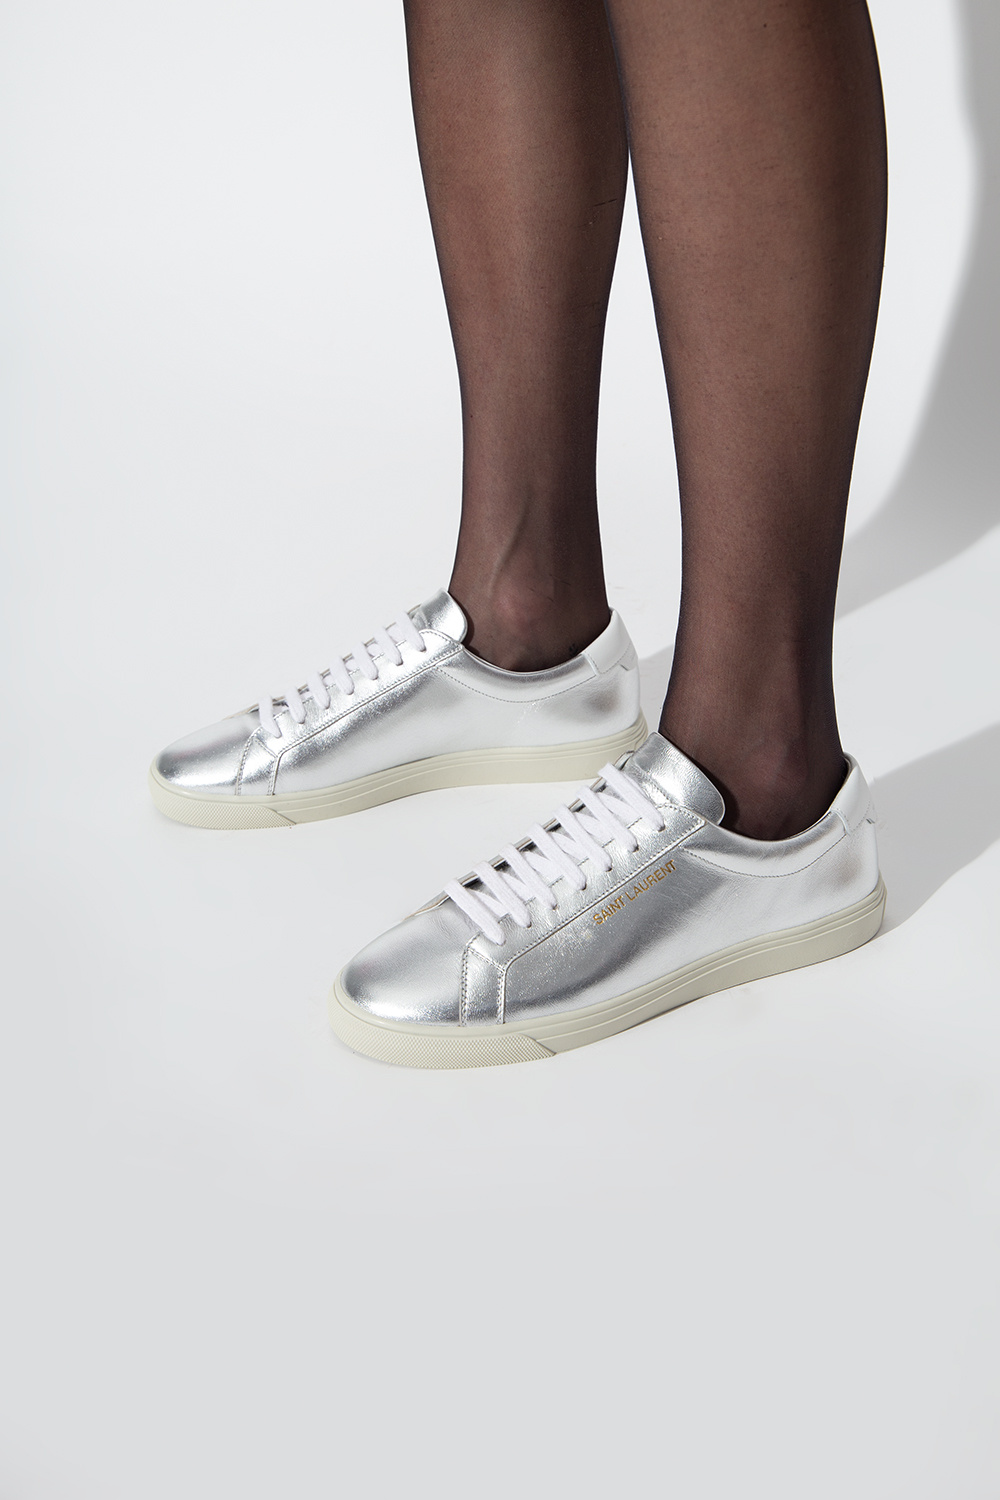 Saint Laurent ‘Andy’ sneakers